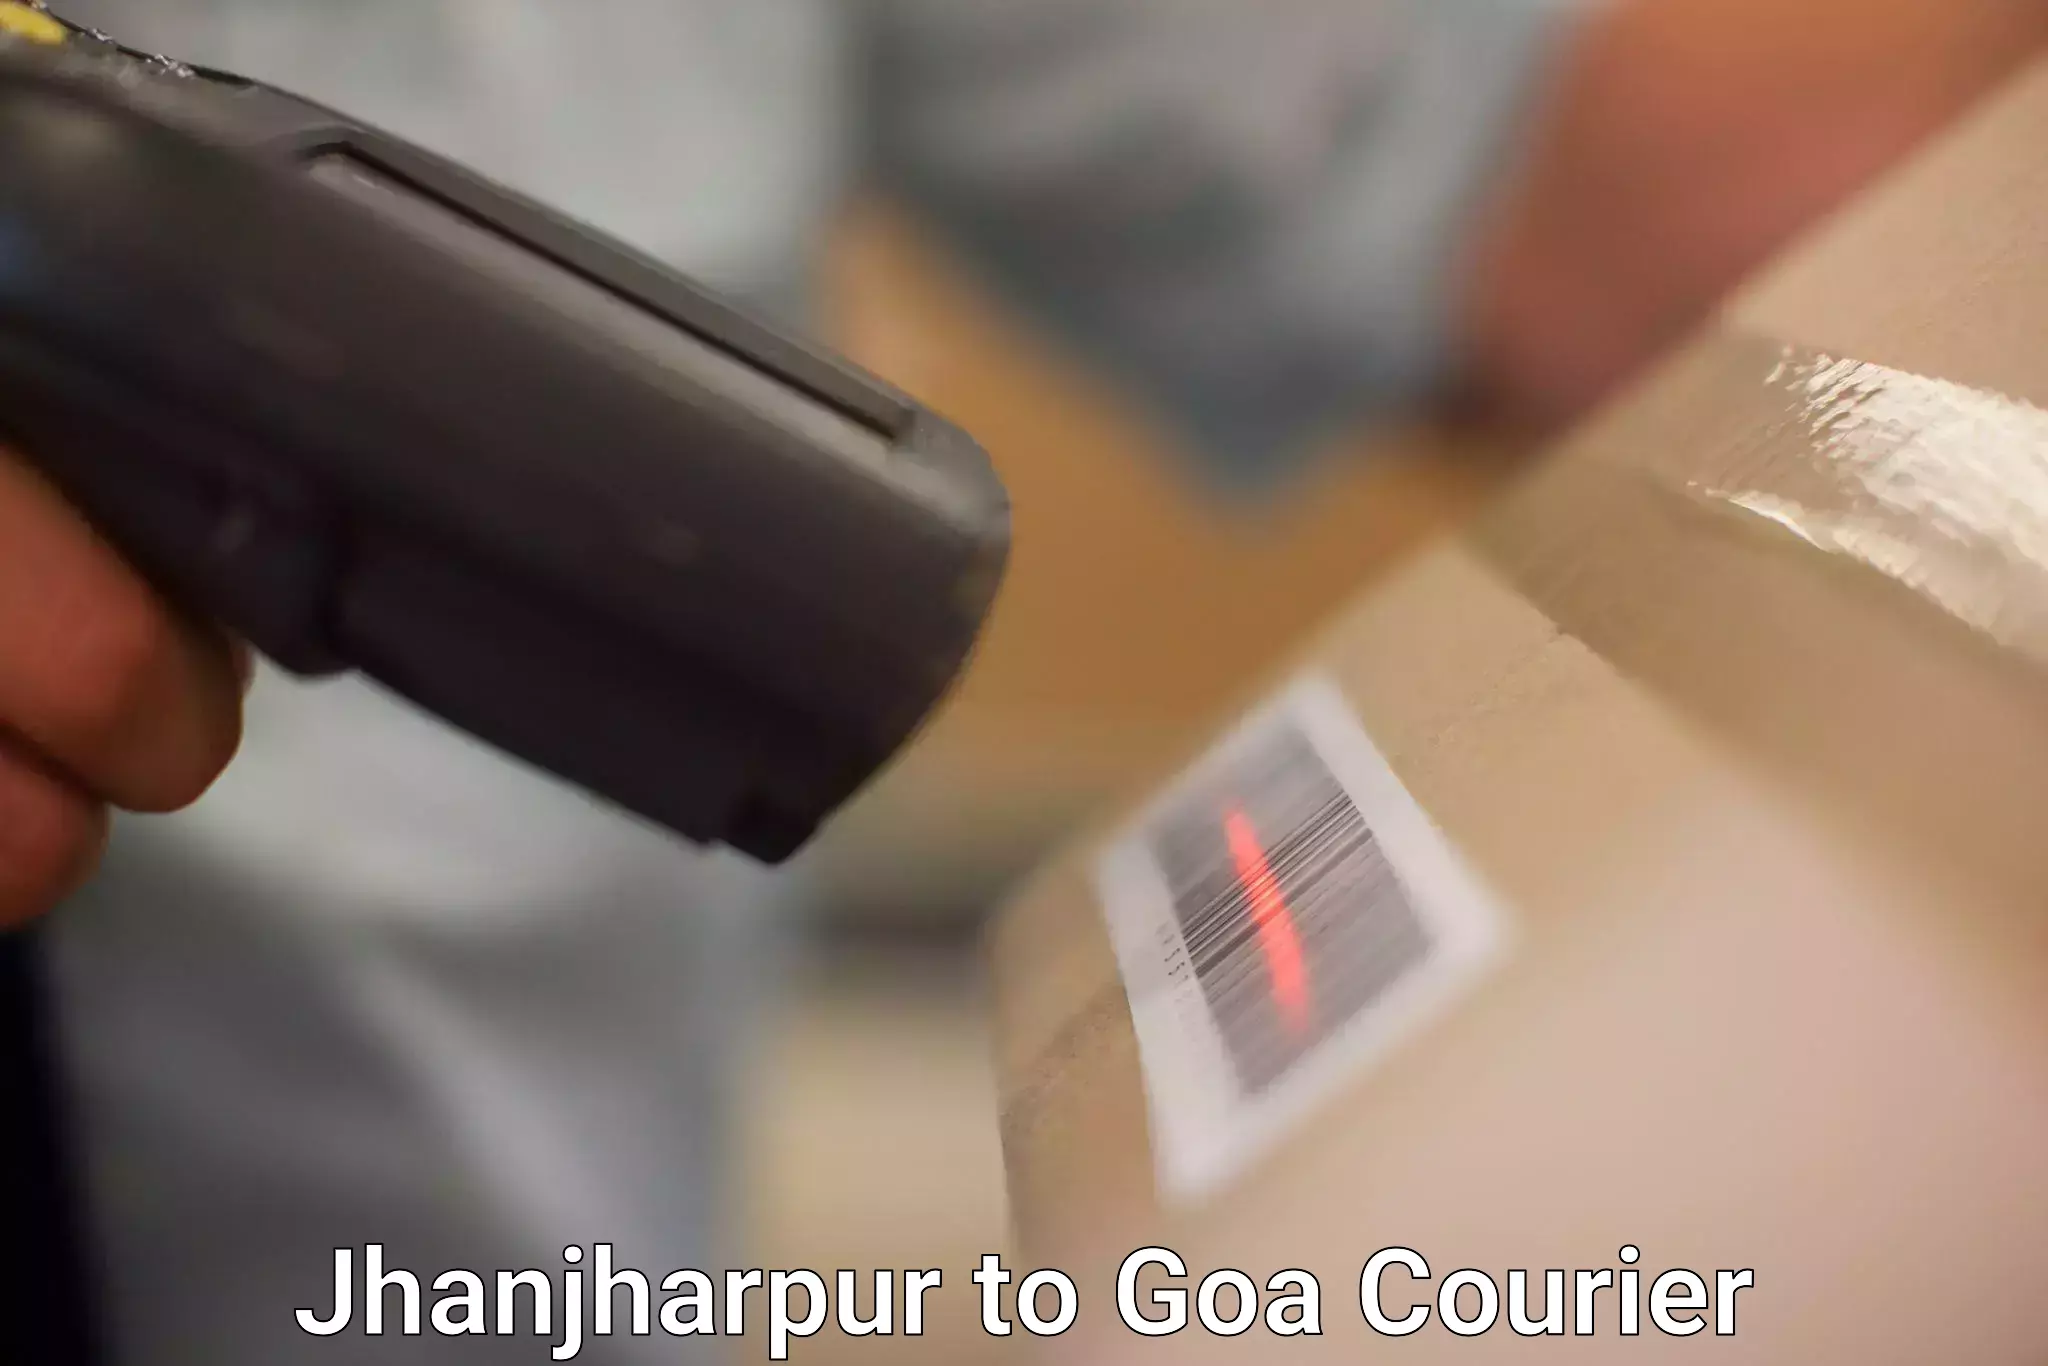 Courier service partnerships Jhanjharpur to Goa University